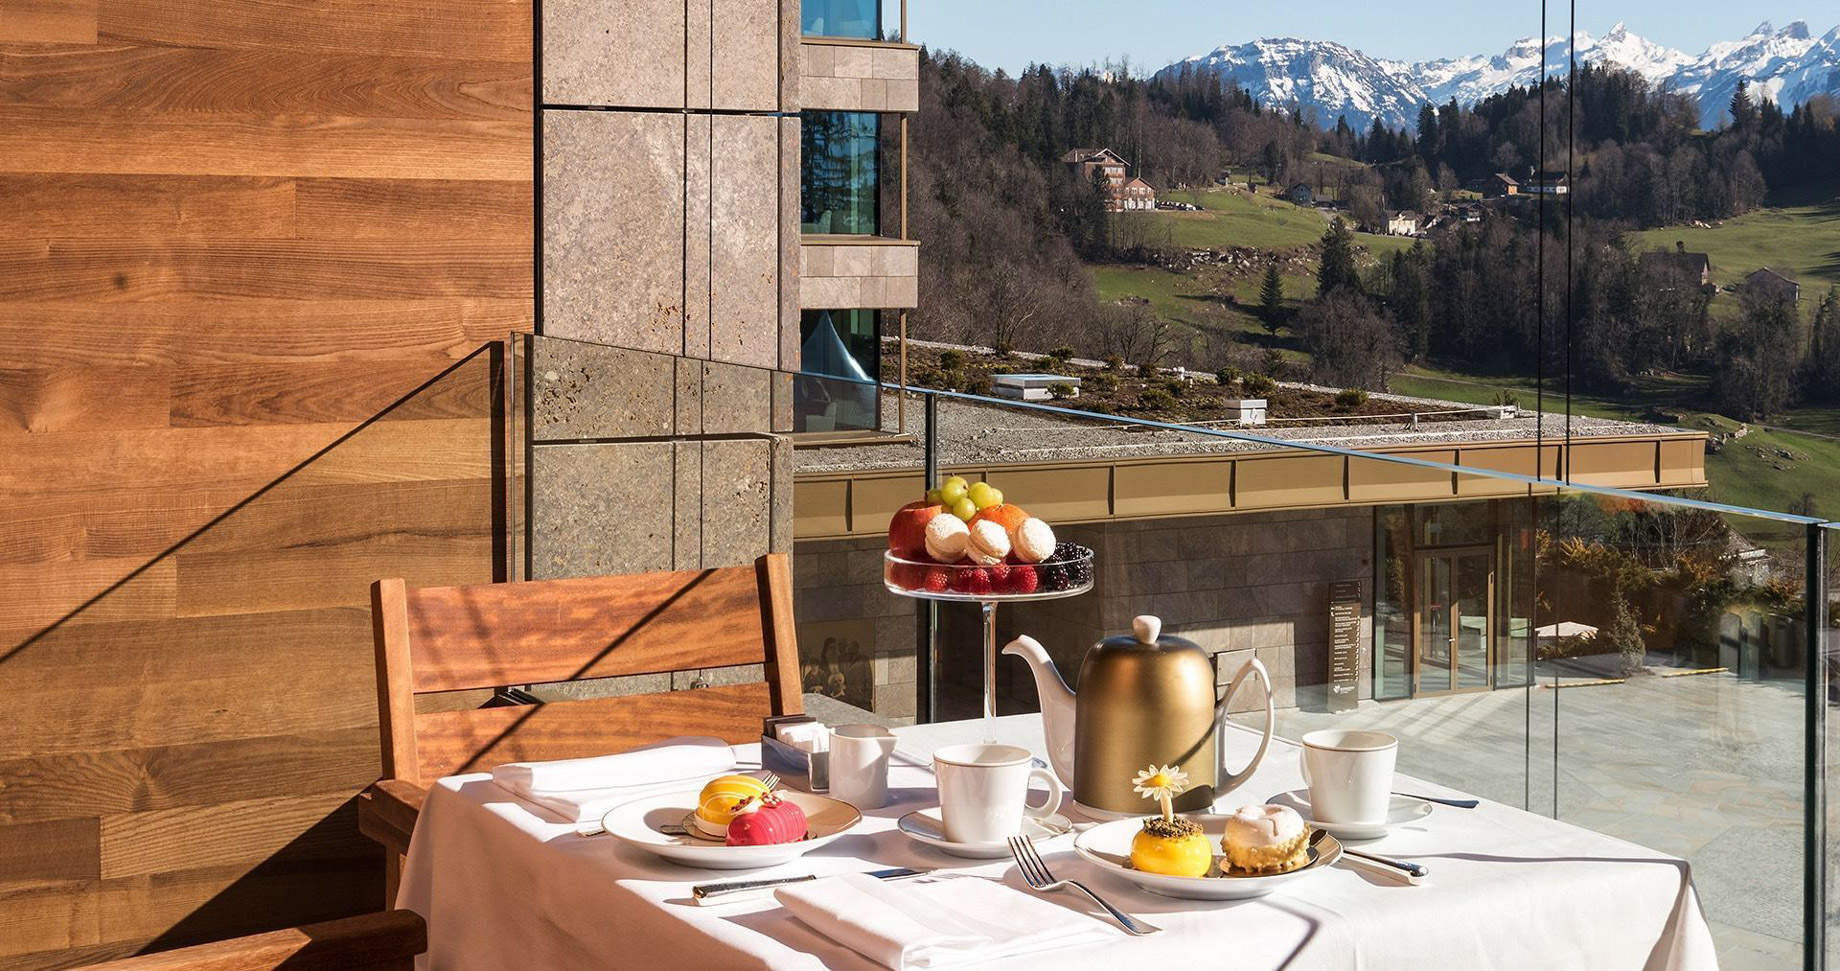 Burgenstock Hotel & Alpine Spa - Obburgen, Switzerland - Panoramic Suite Balcony Dining Table